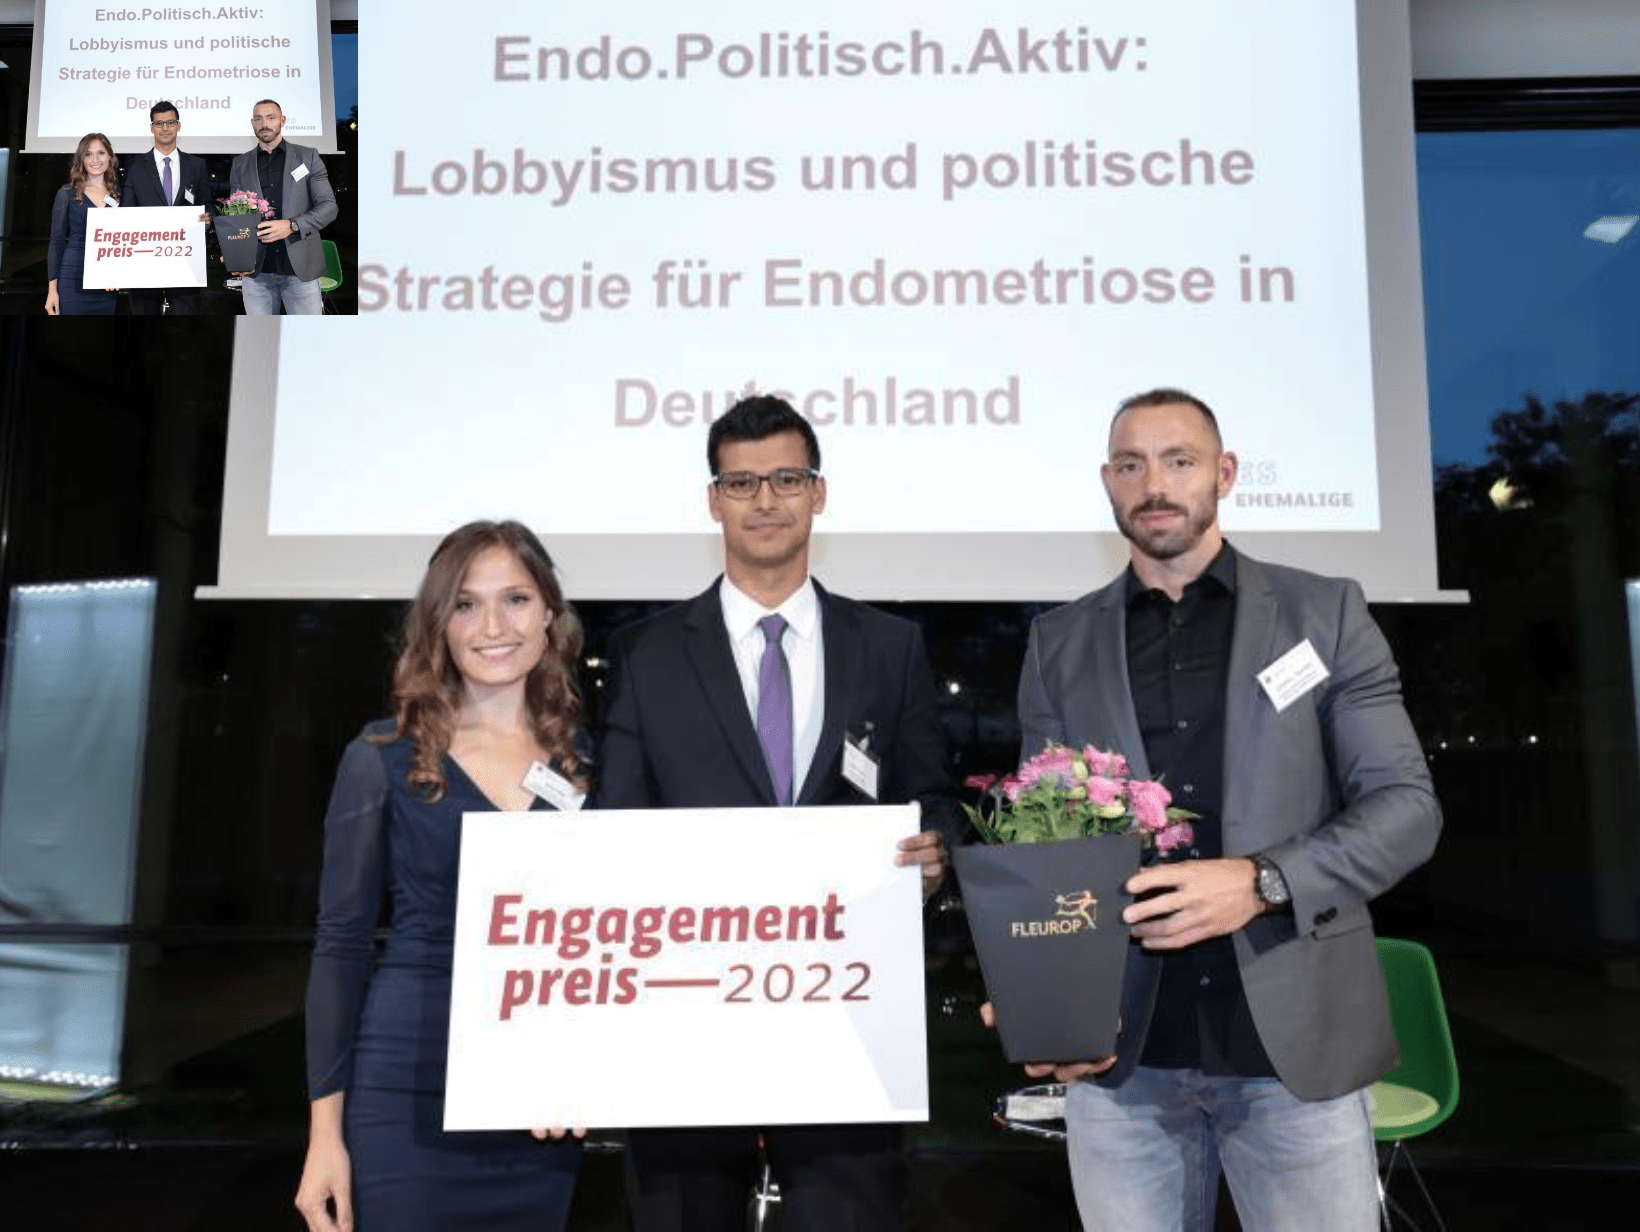 Engagementpreis der Friedrich-Ebert-Stiftung